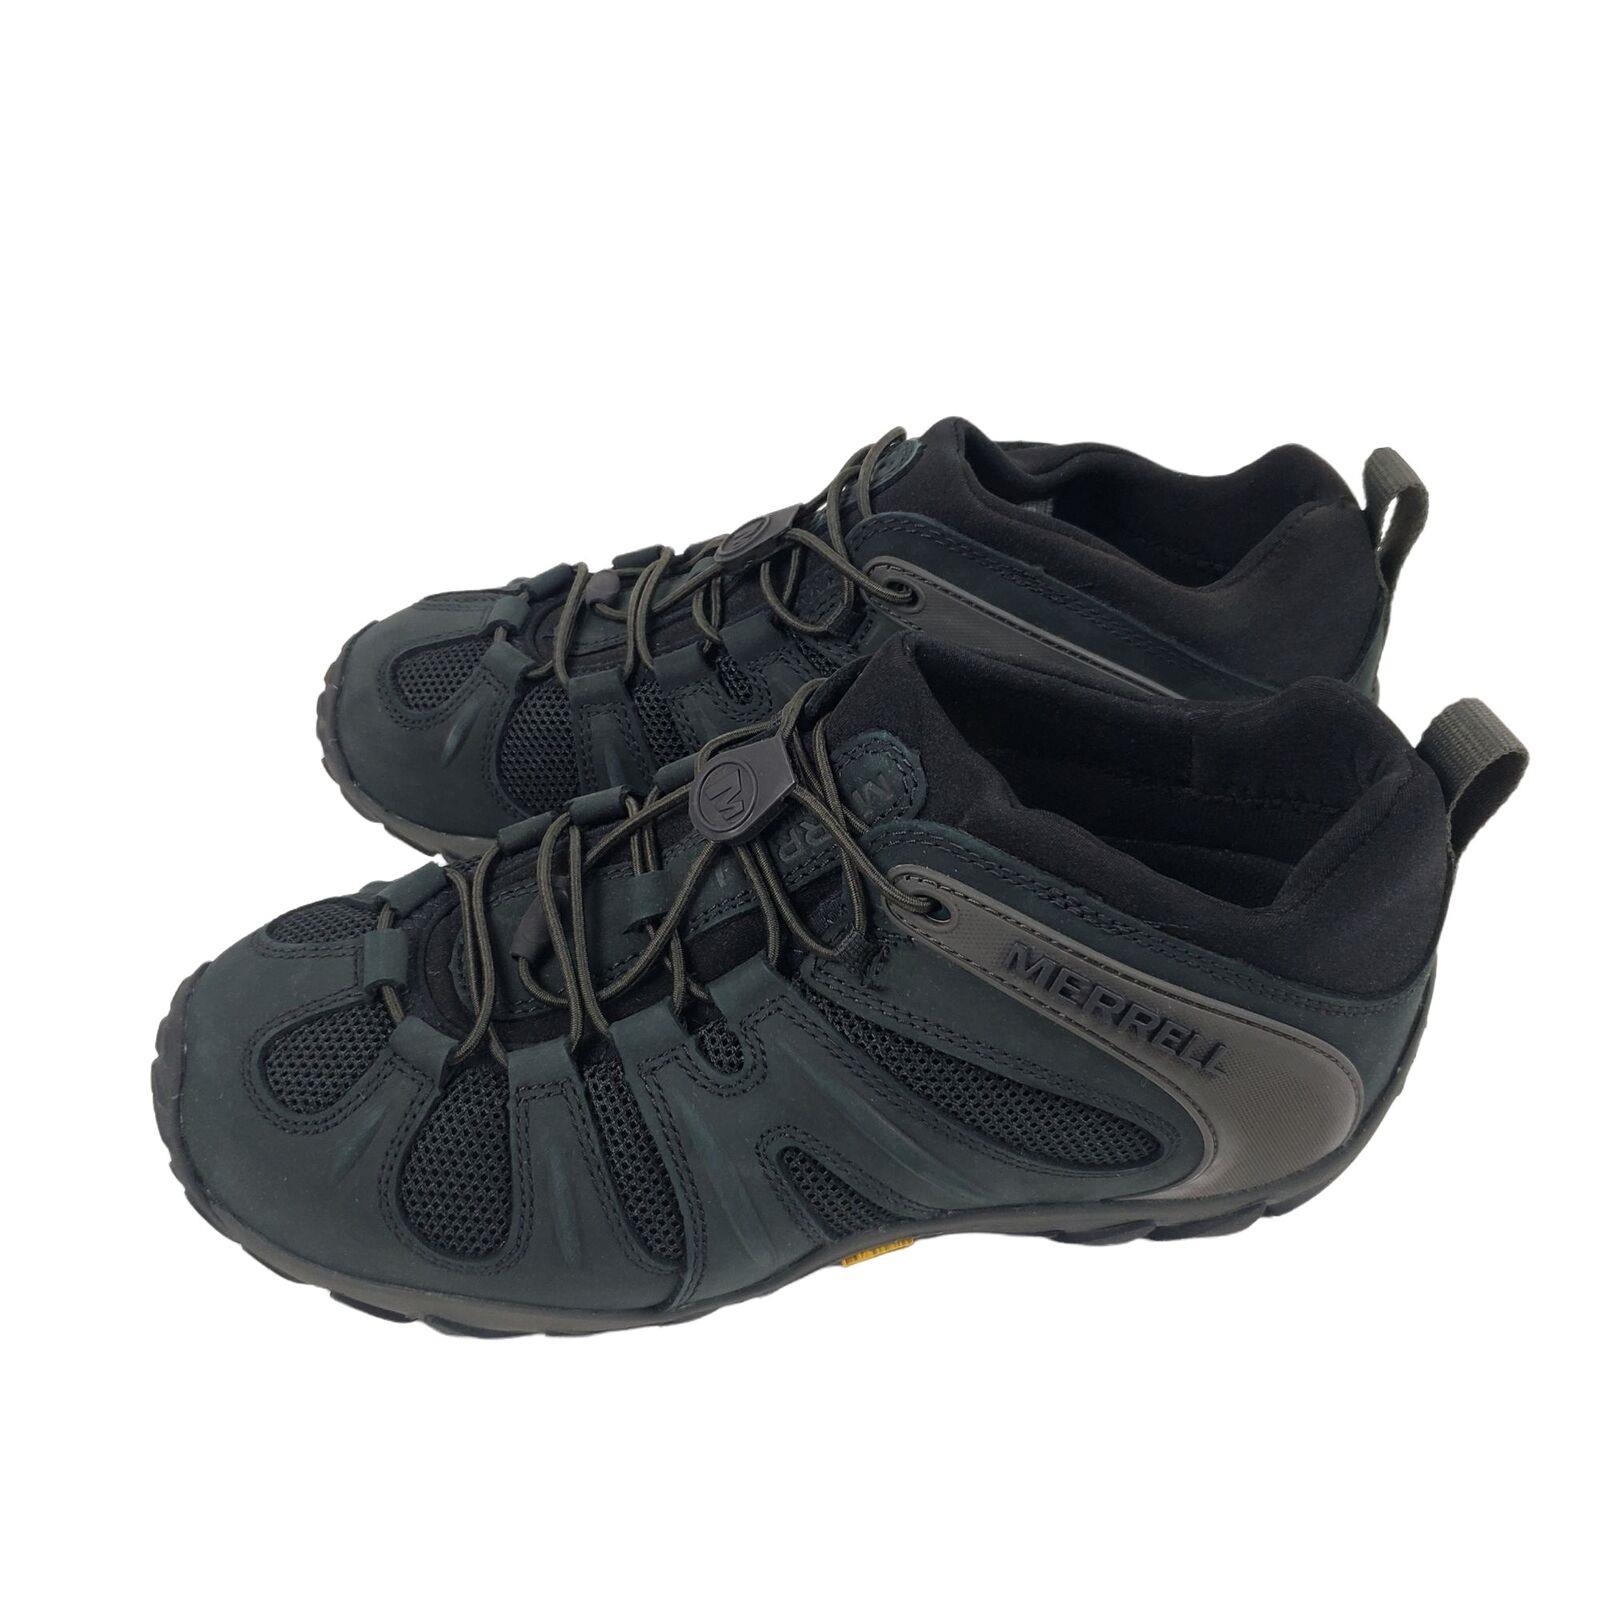 Merrell Chameleon Cham 8 Stretch Black Boot Shoes Men`s Size 7 J033091